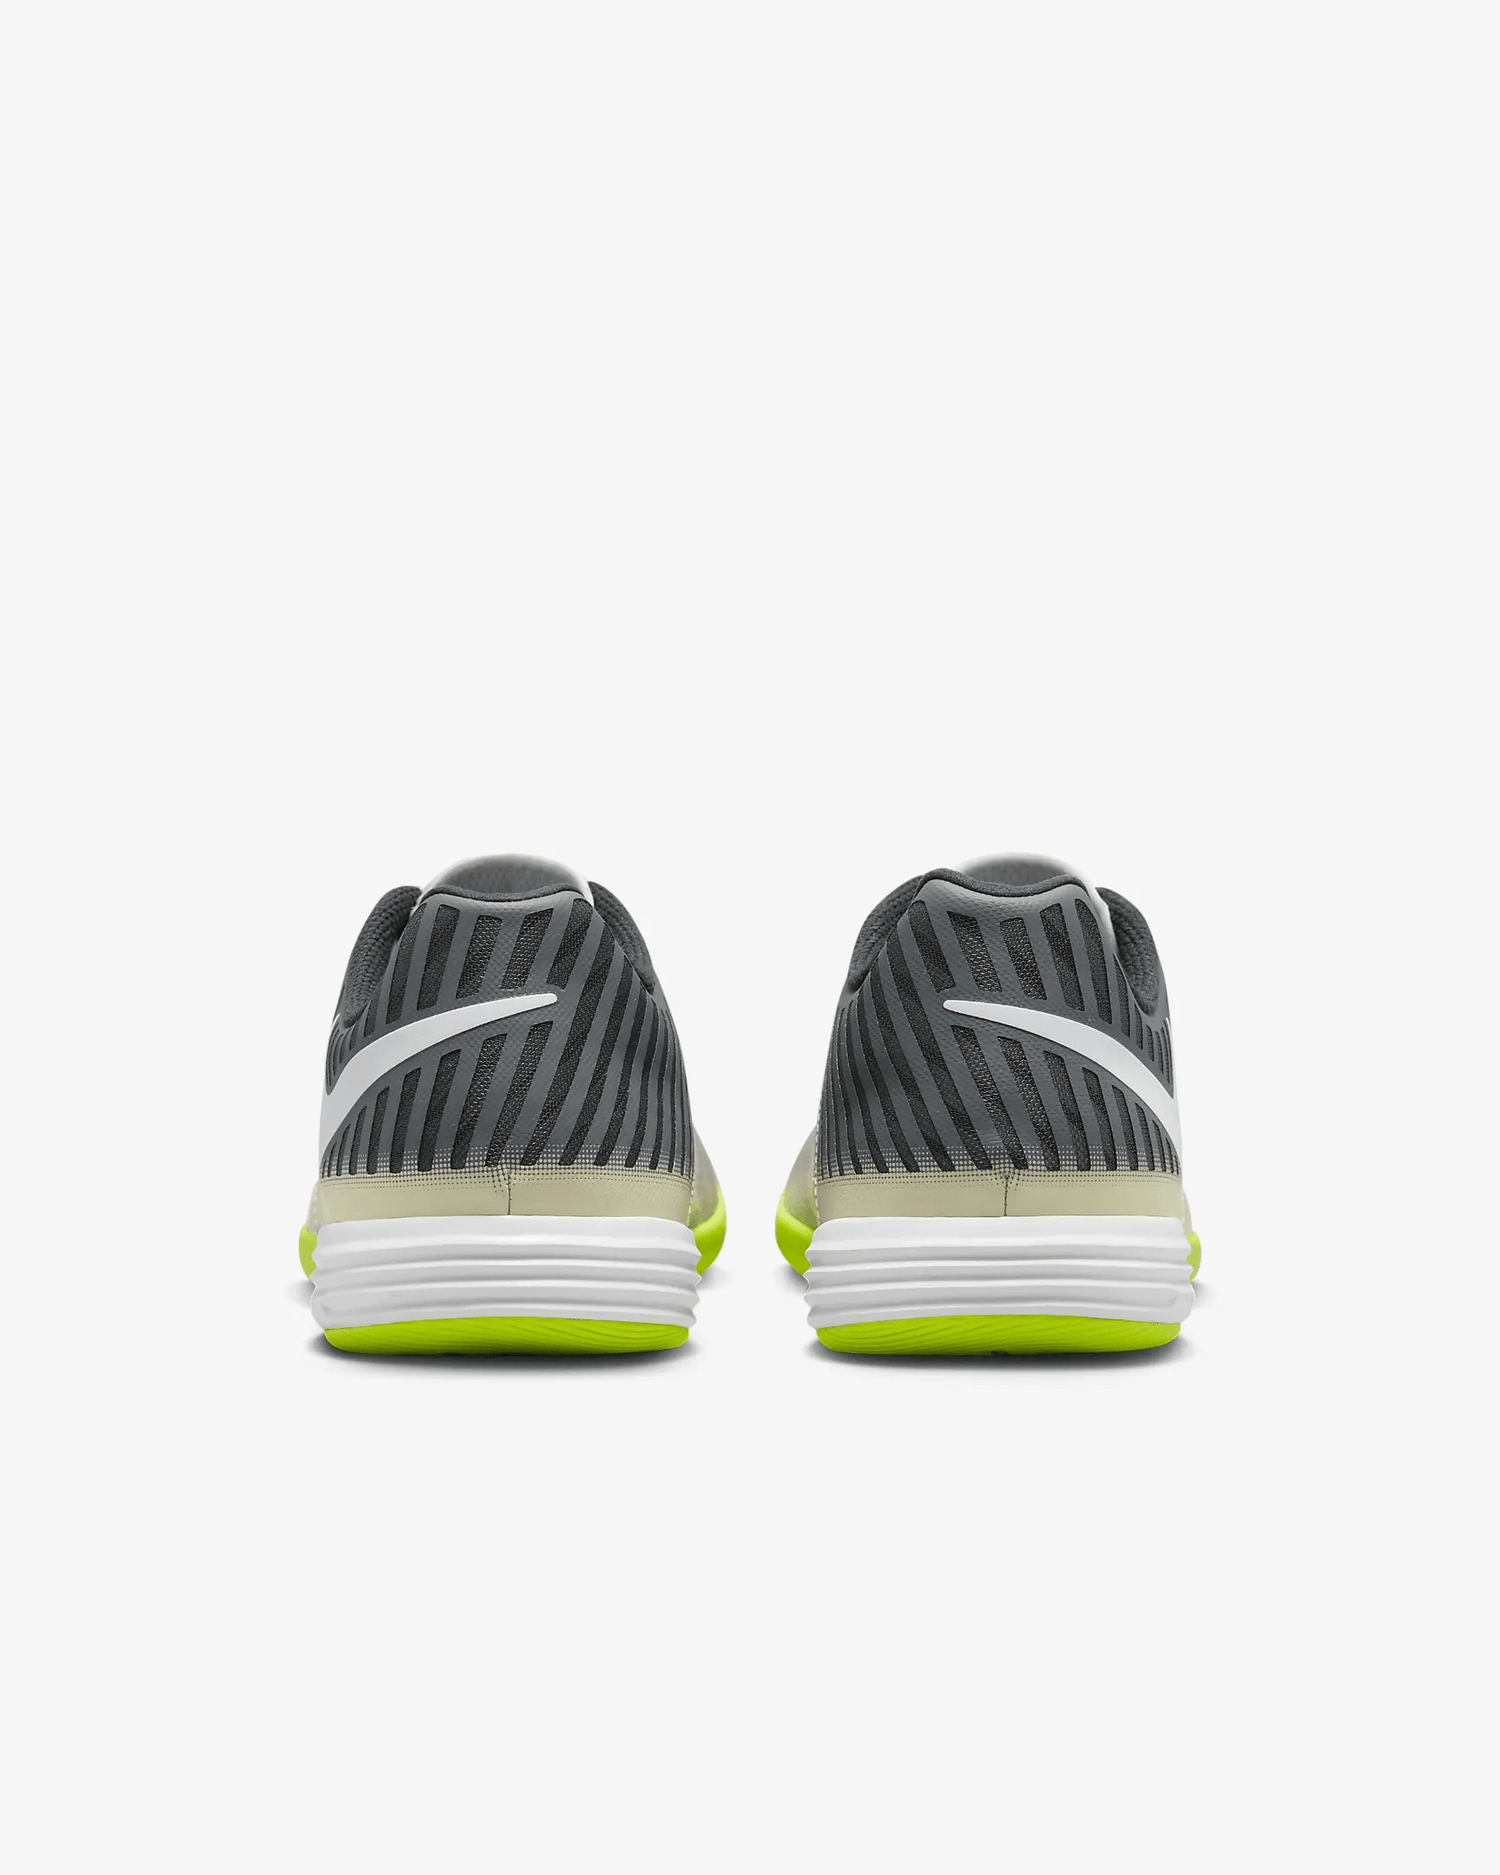 Nike Lunargato II Smoke Grey-Anthracite-Pale Grey-White (Pair - Back)